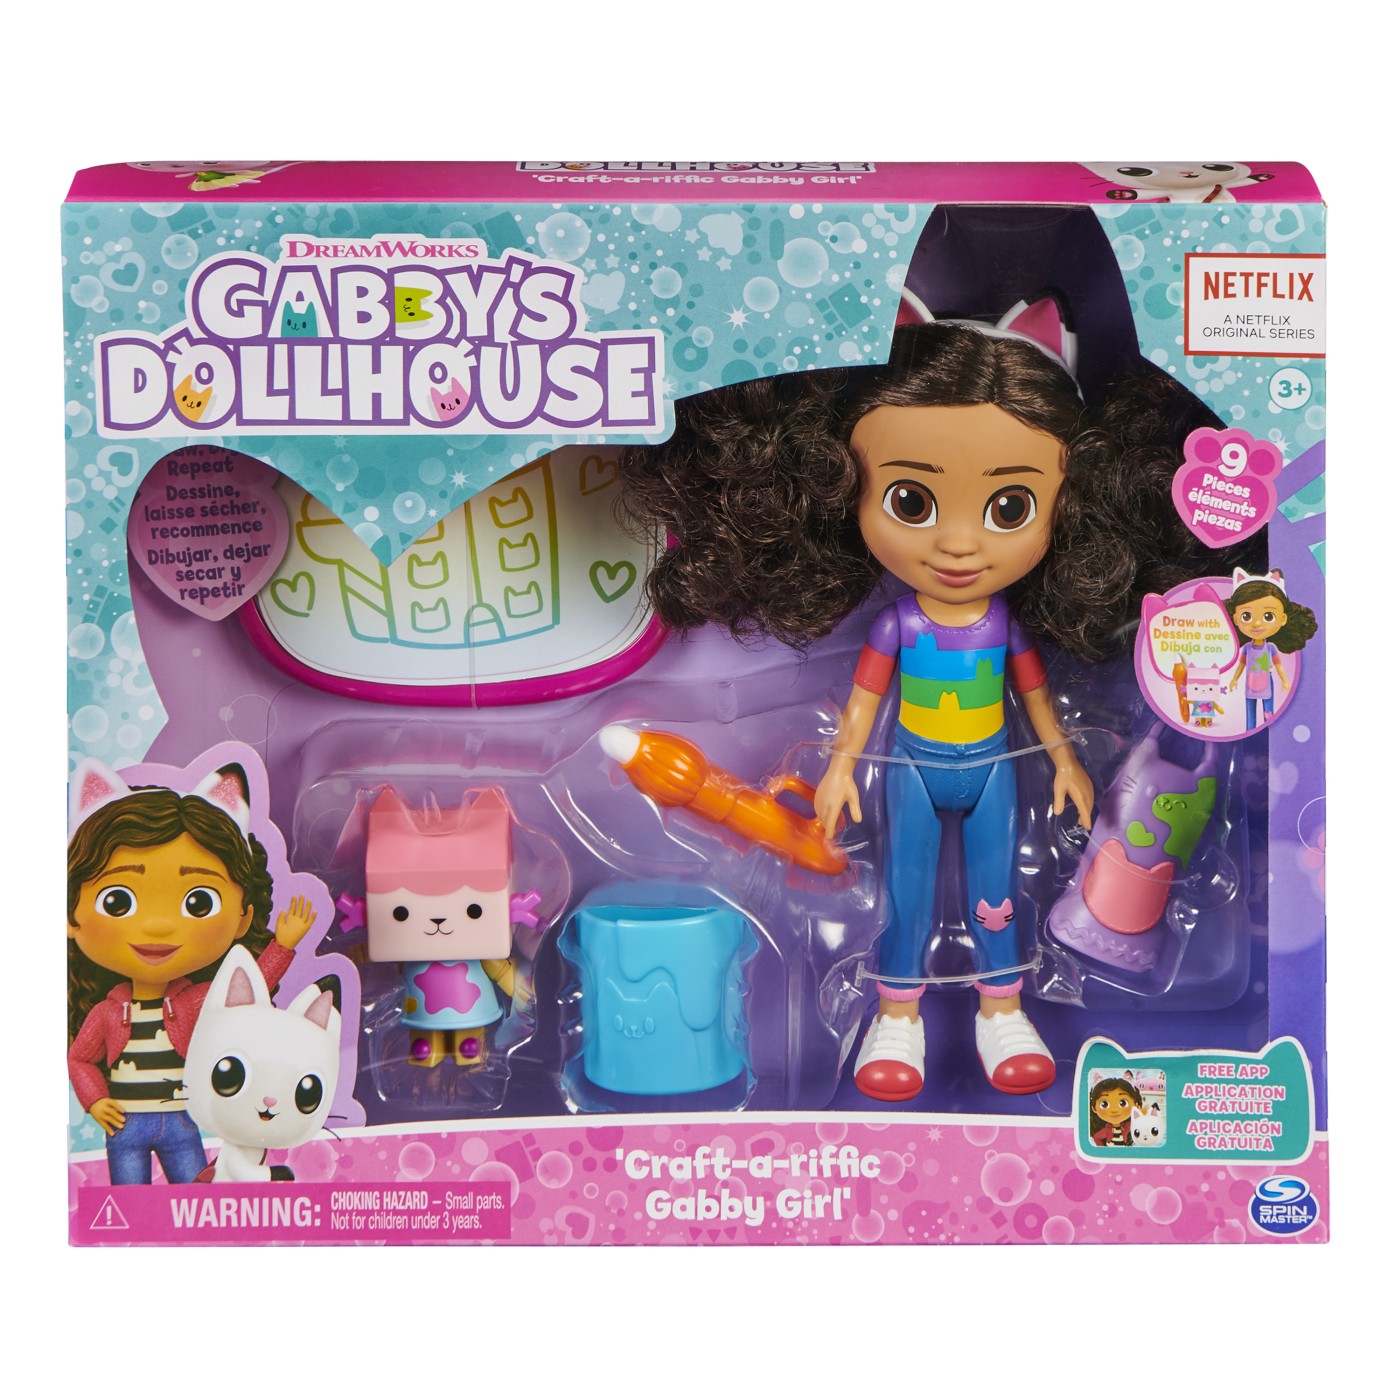 Papusa - Gabby's Dollhouse - Craft-a-riffic Gabby Girl | Spin Master